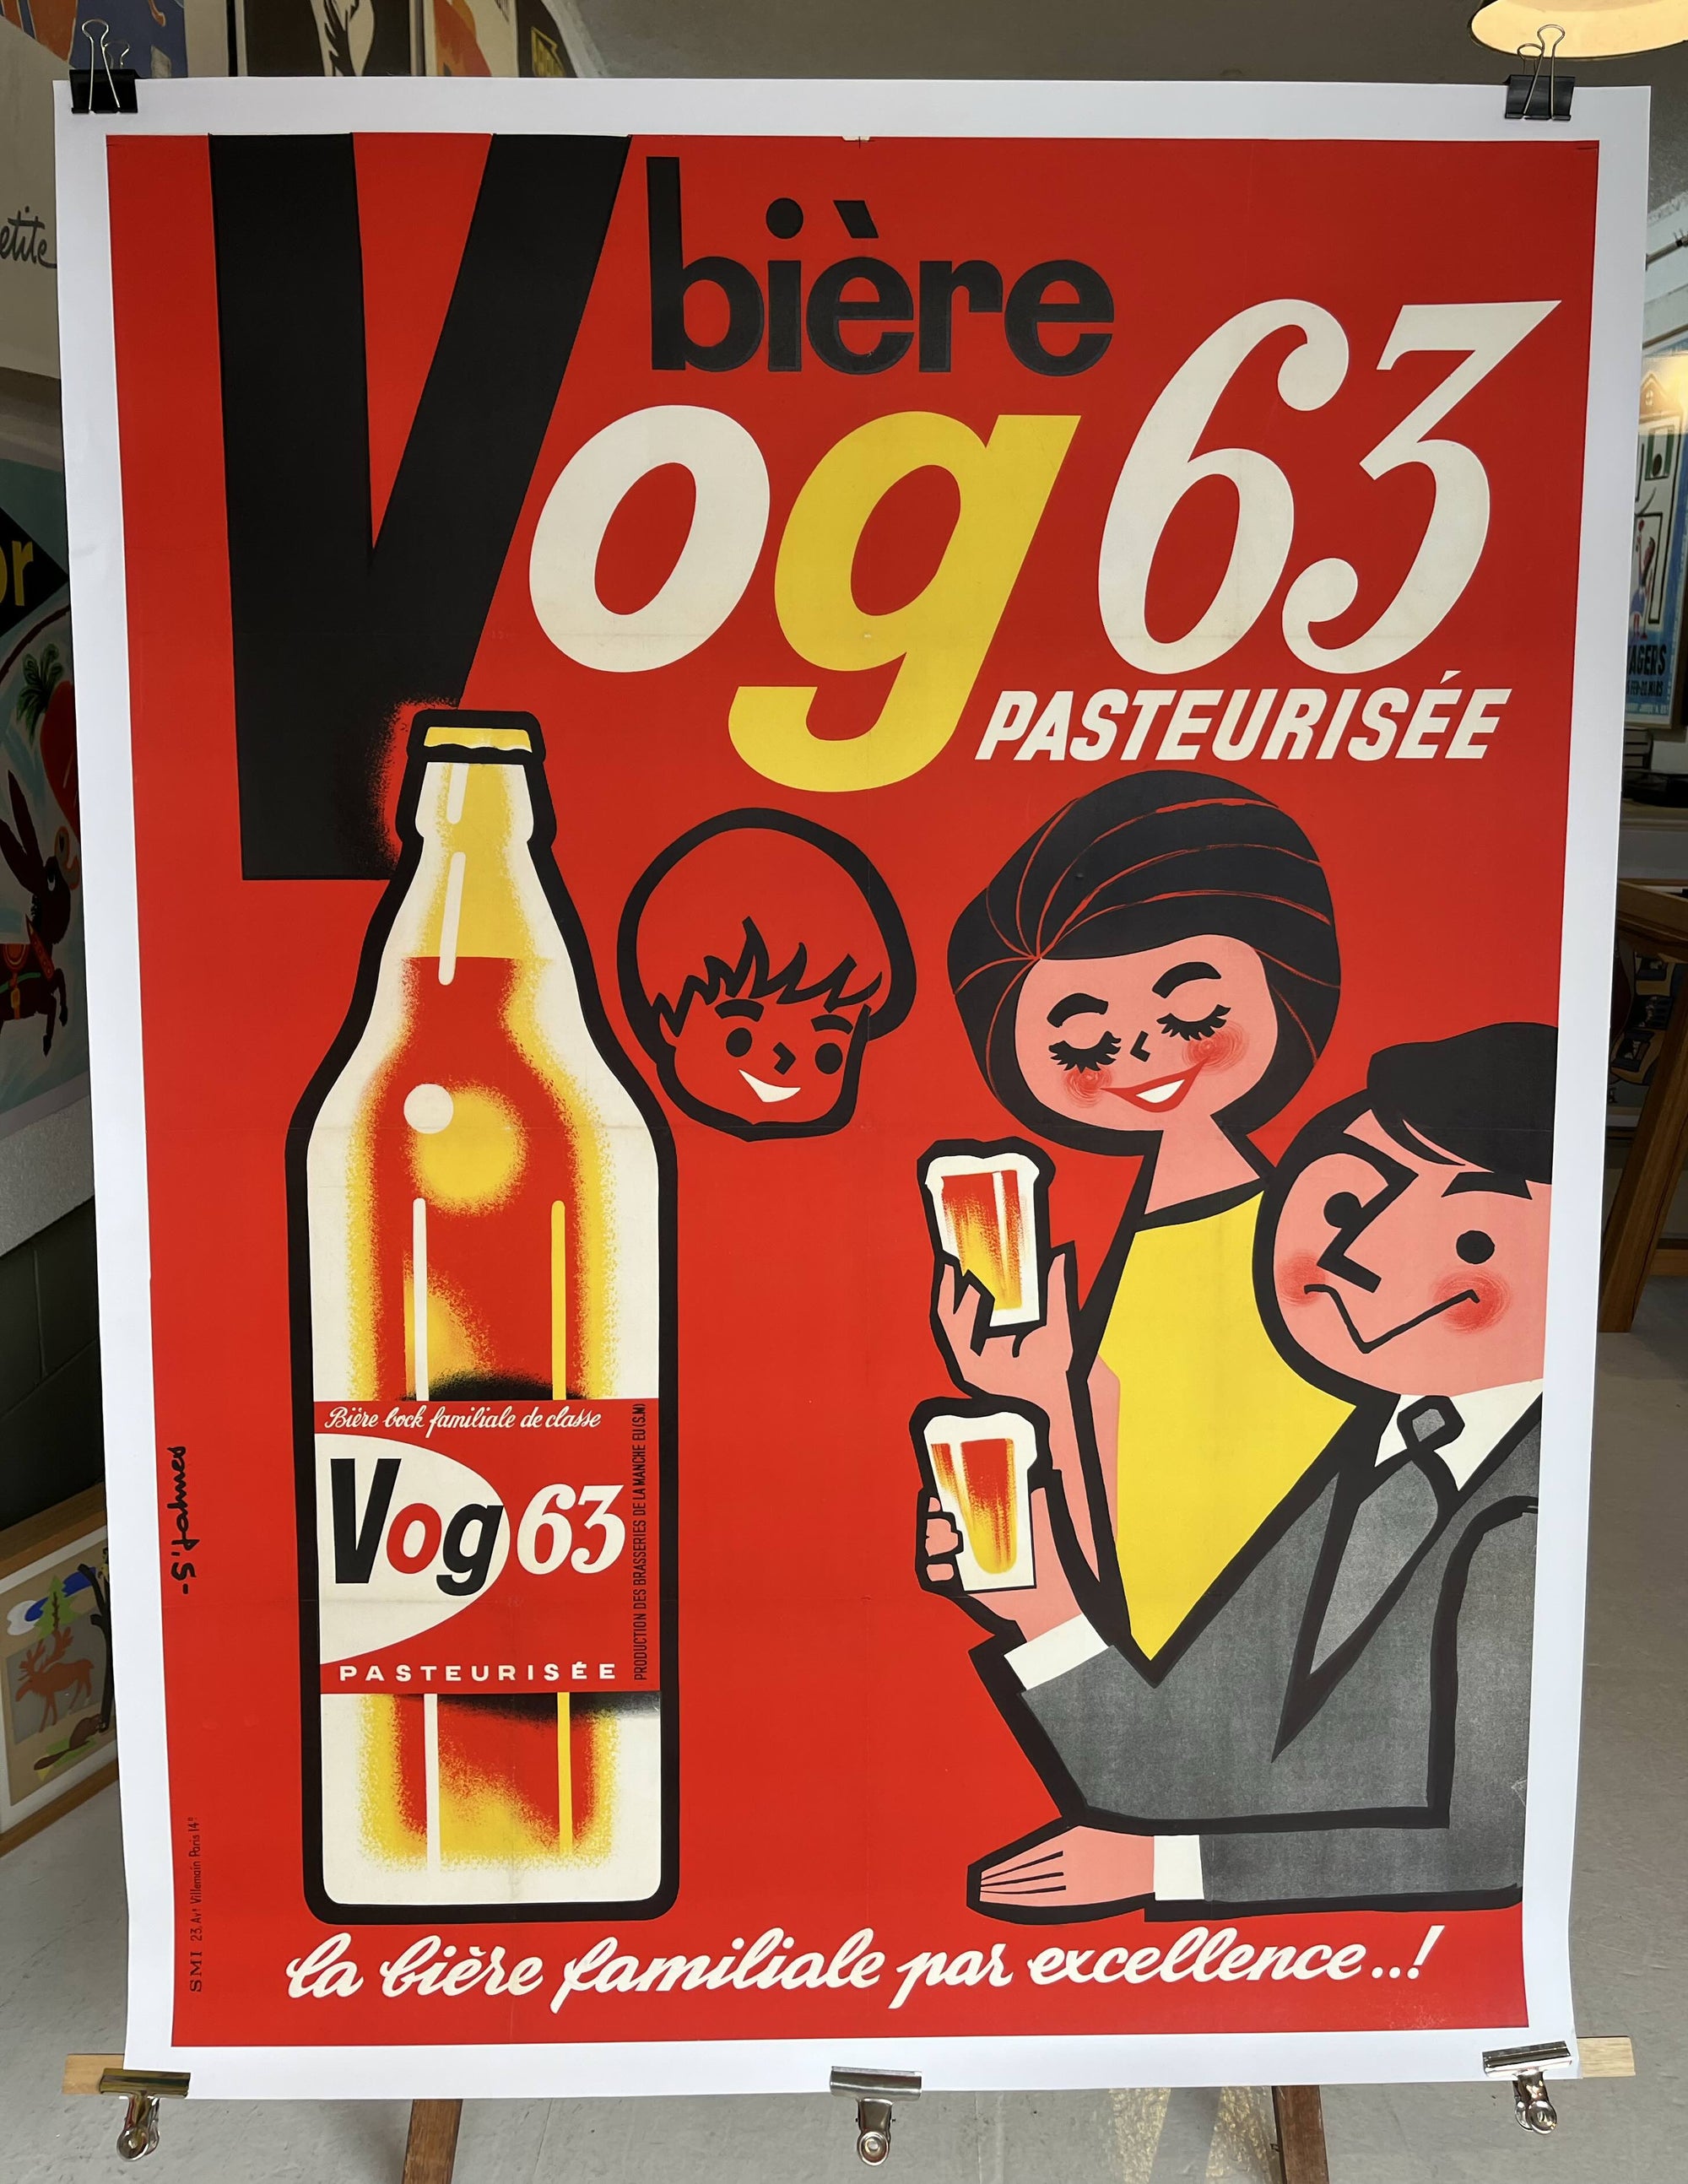 Vog 63 Beer by S.Johnes